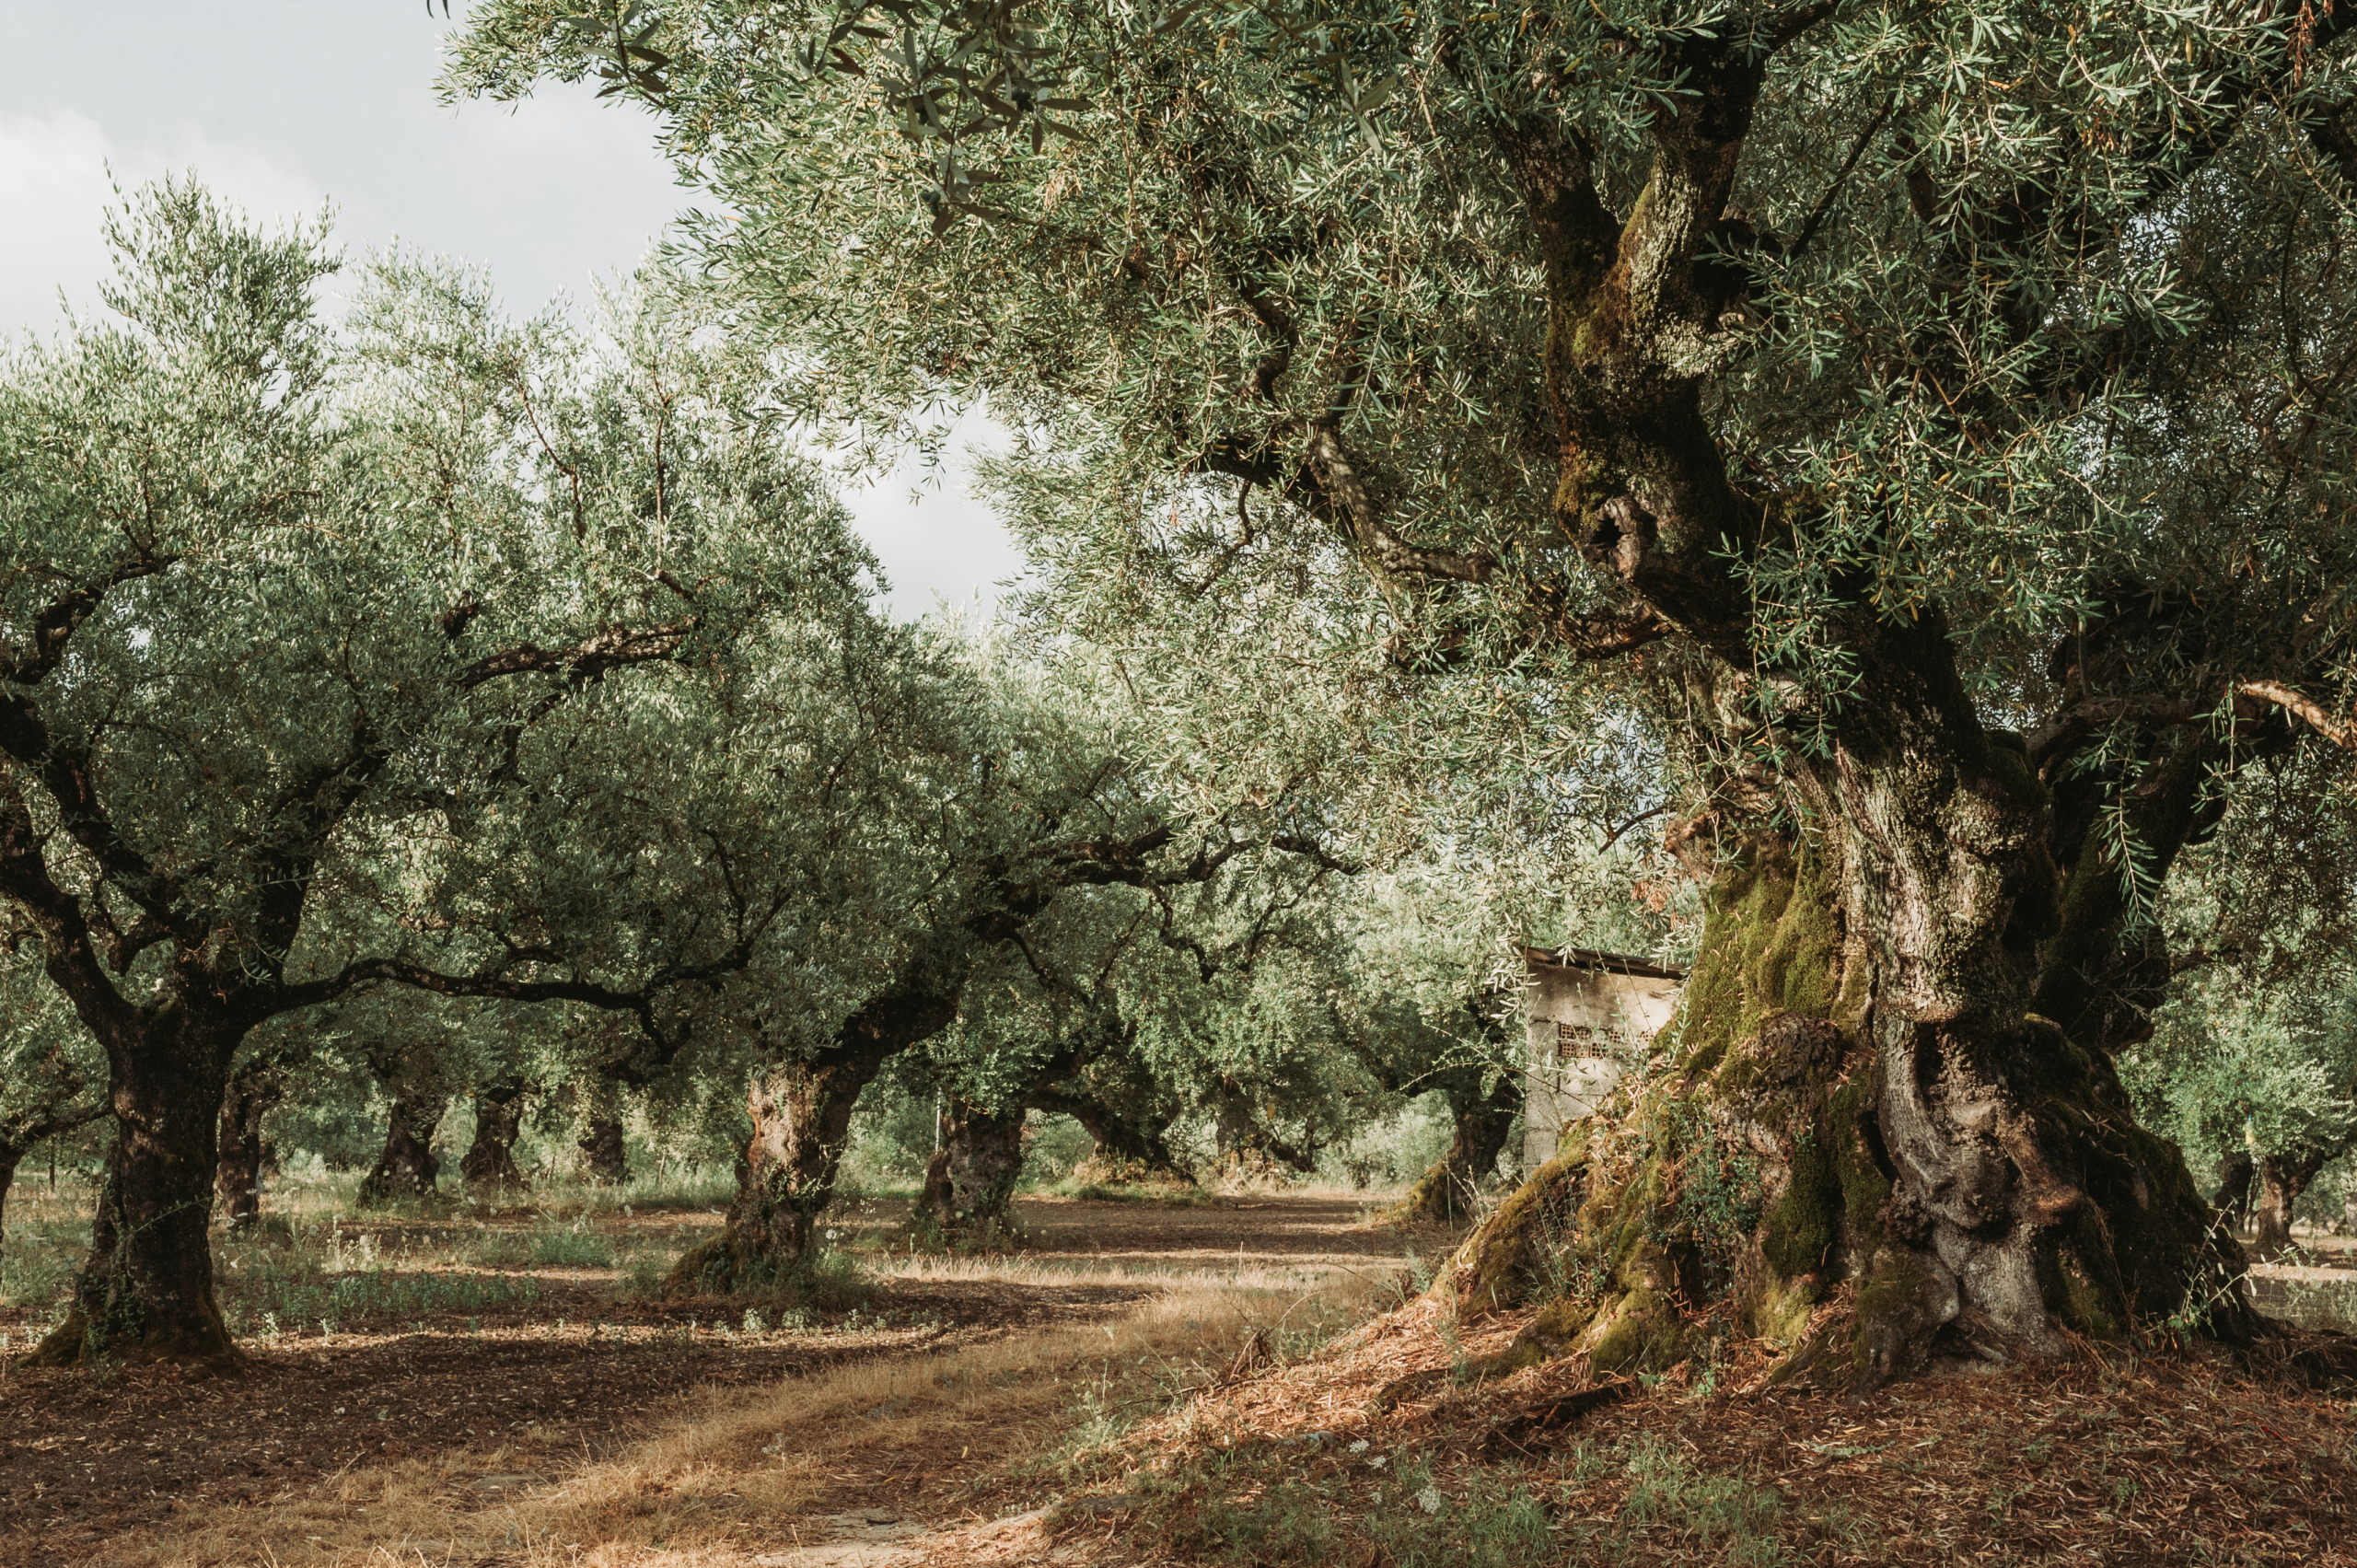 Olive Grove trees